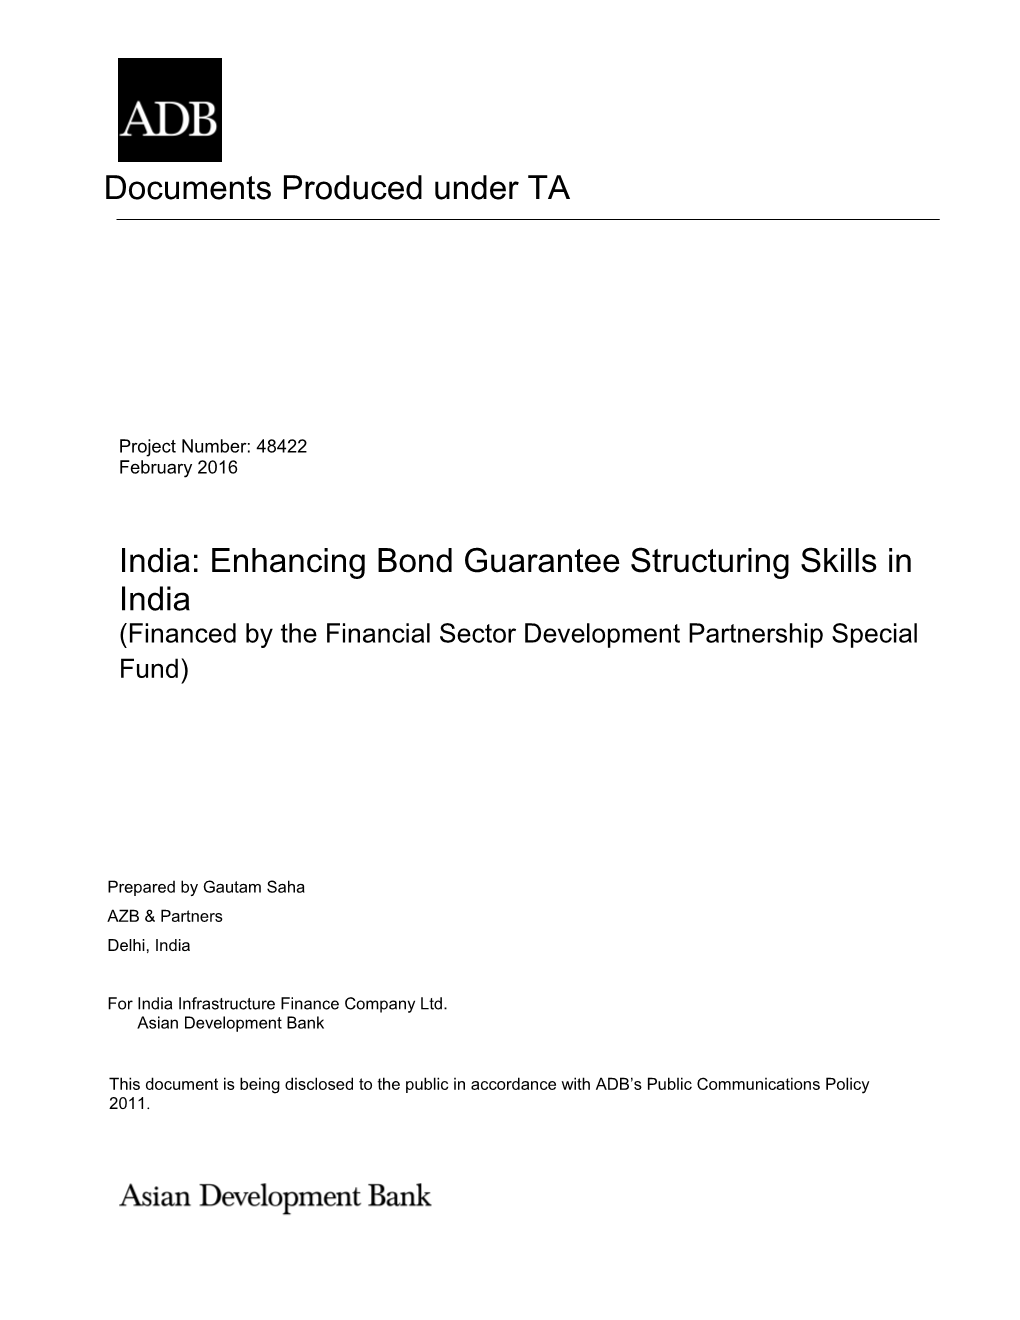 India: Enhancing Bond Guarantee Structuring Skills in India